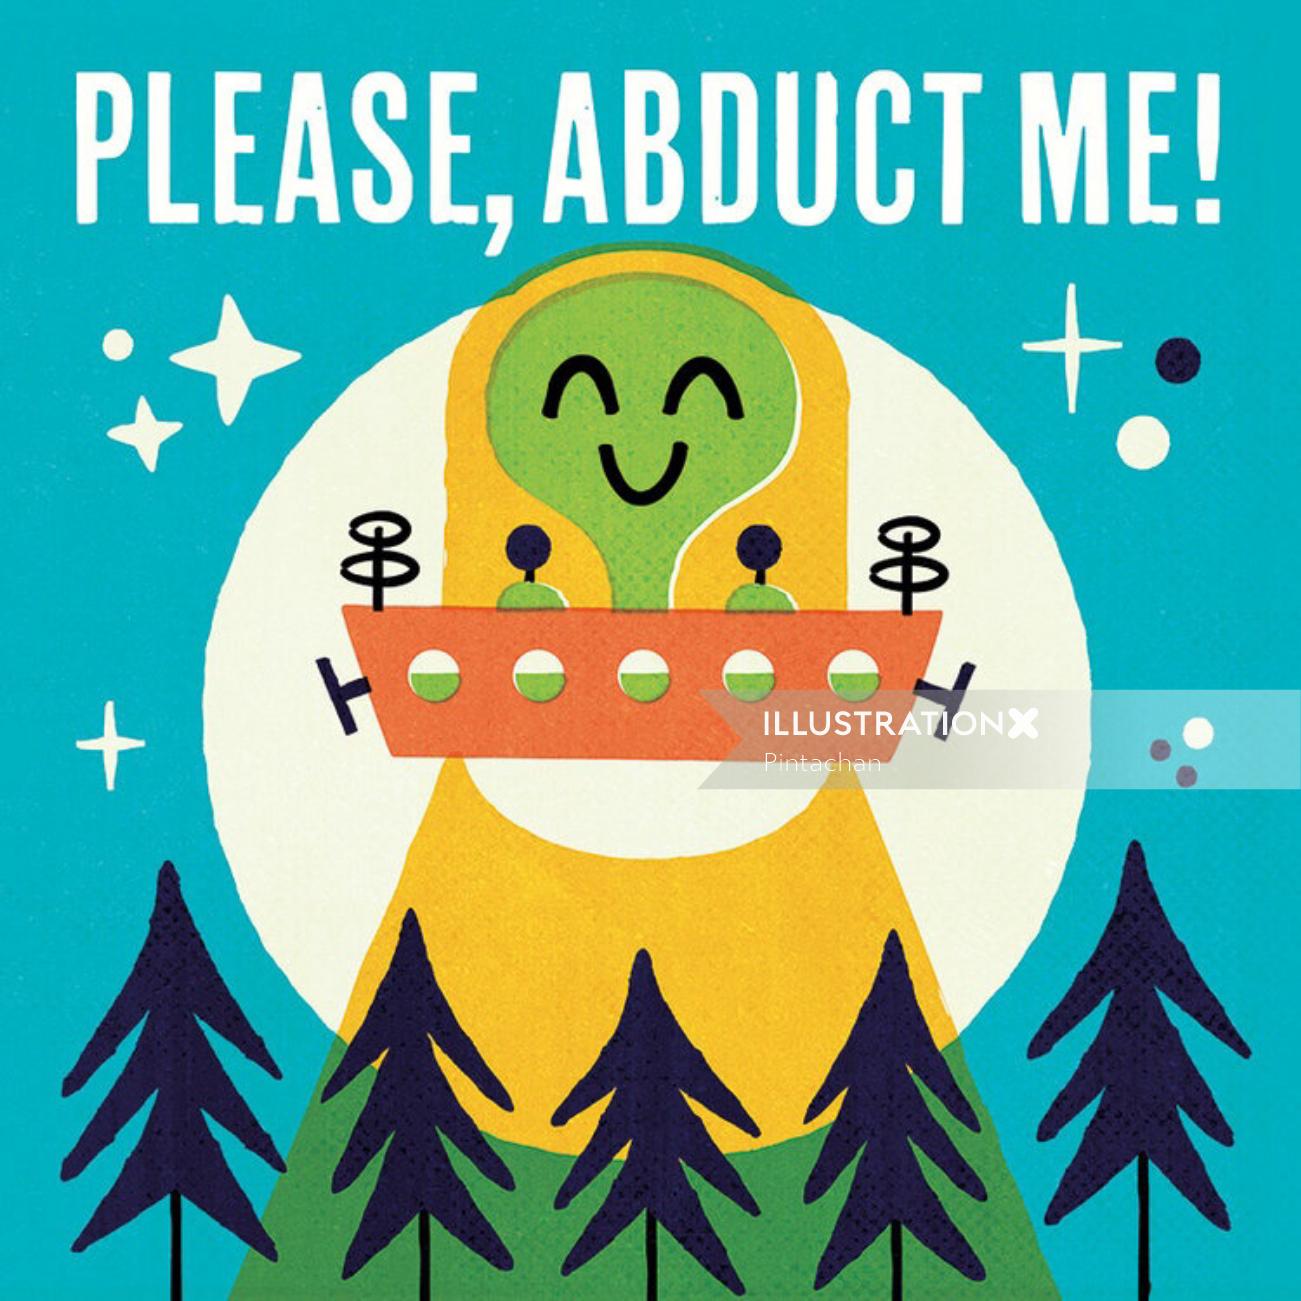 Please, Abduct Me! Lettering illustration